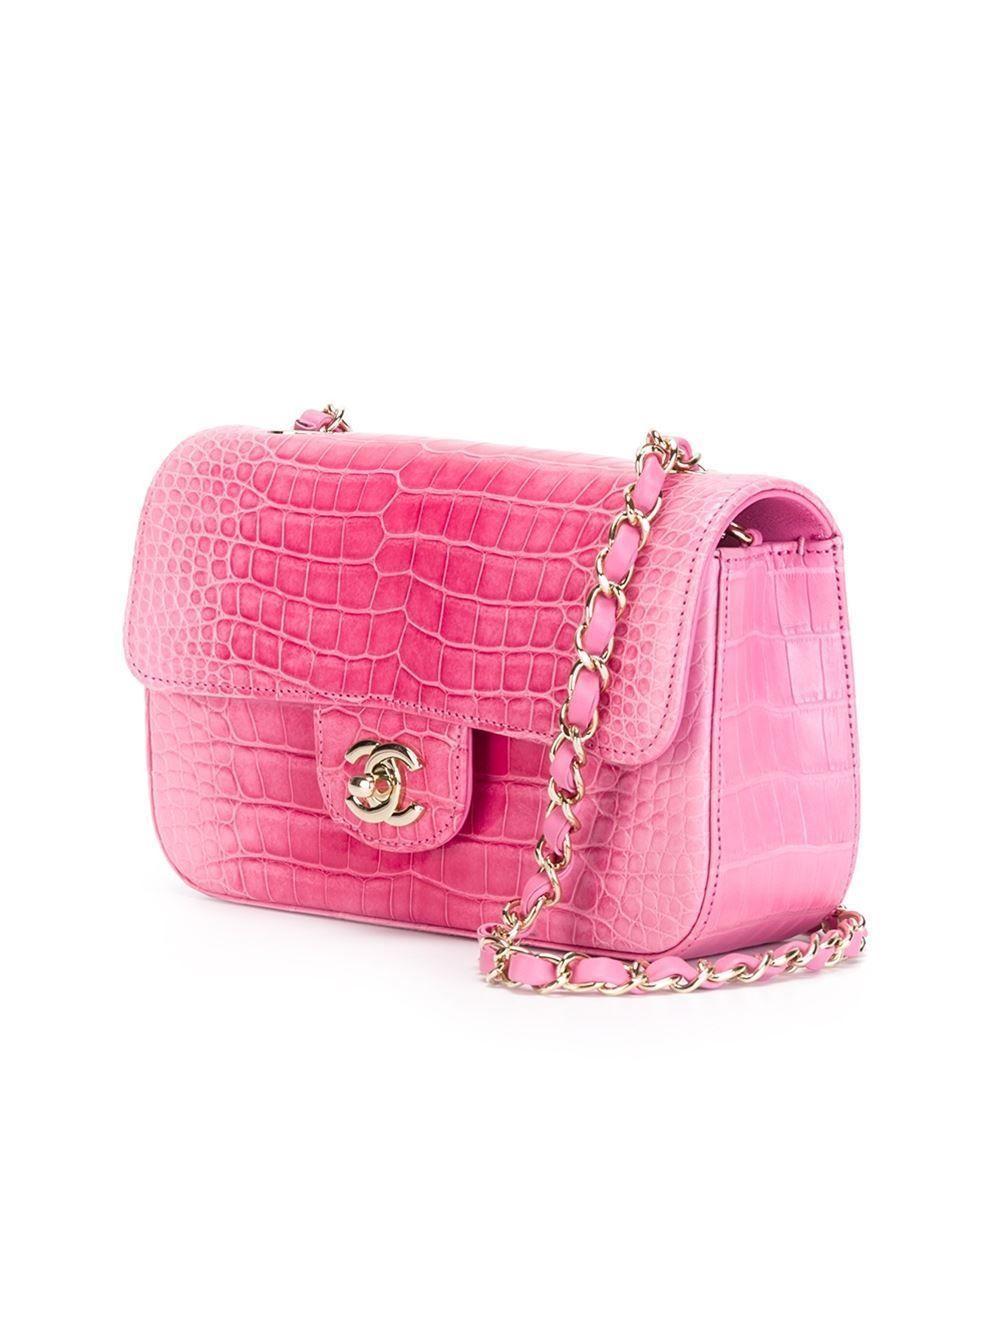 Pink Crocodile Logo - Chanel Pink Crocodile Shoulder Bag | Hand Me the Bag | Chanel ...